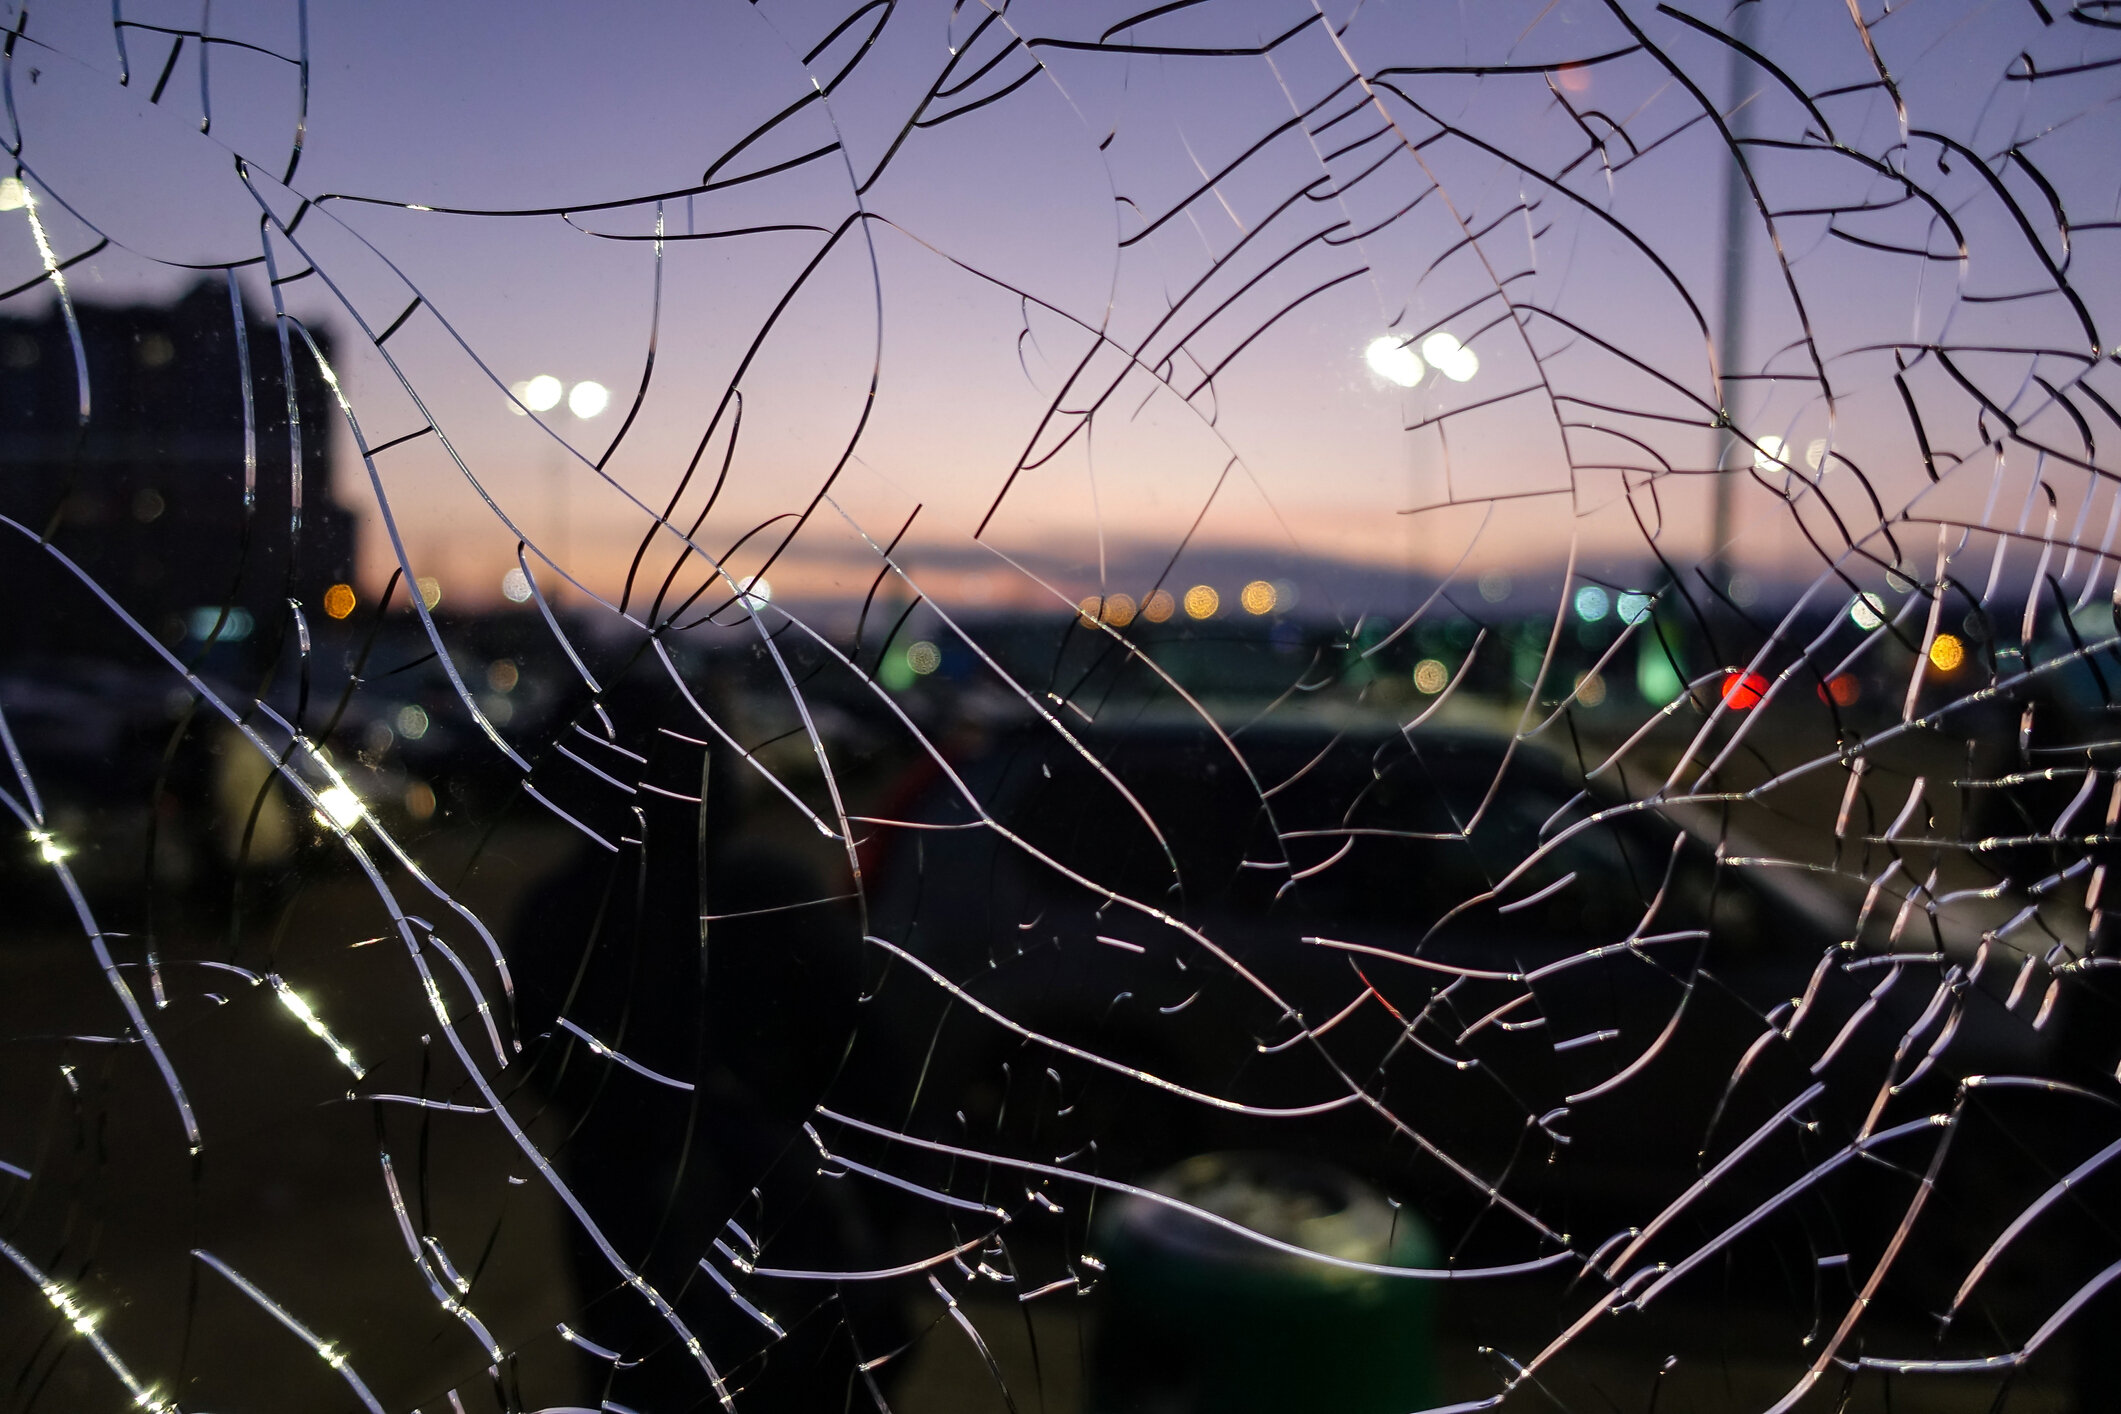 Perspectives through broken glass window